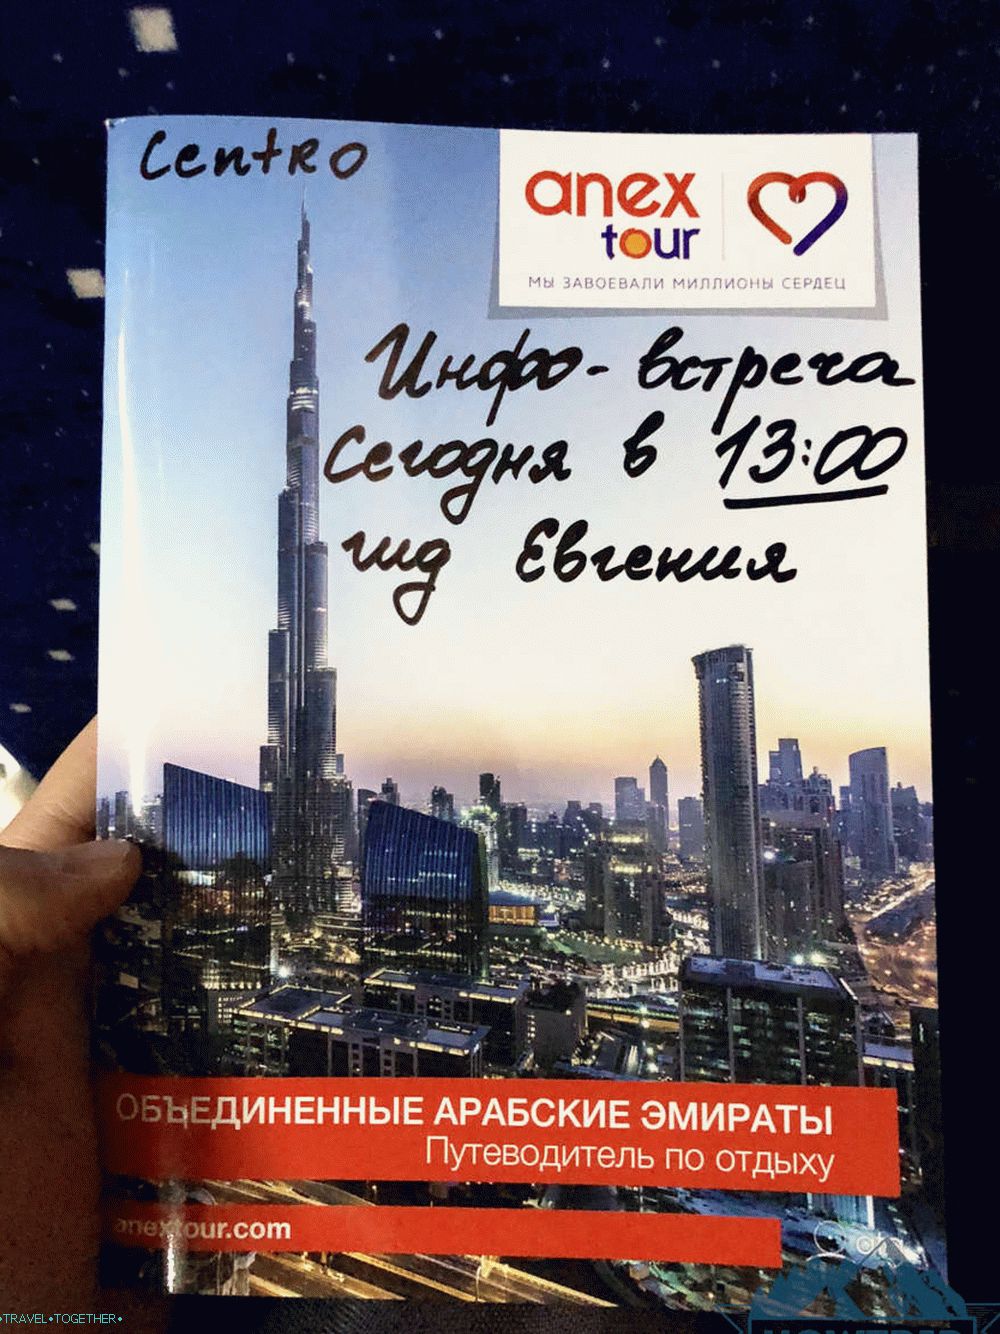 Anex турне в хотела